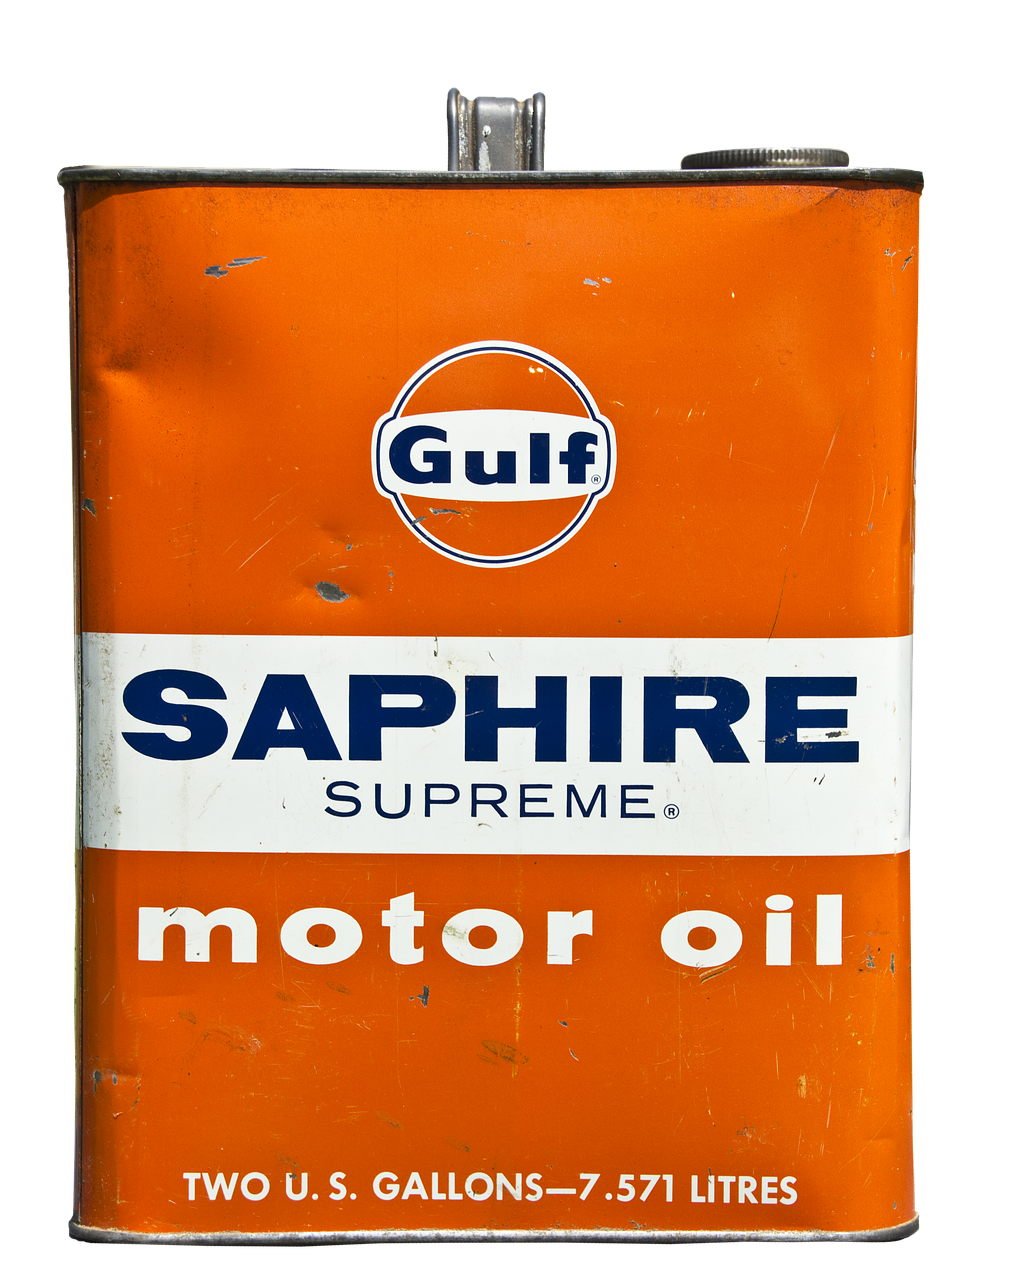 oil can cutout oil free photo